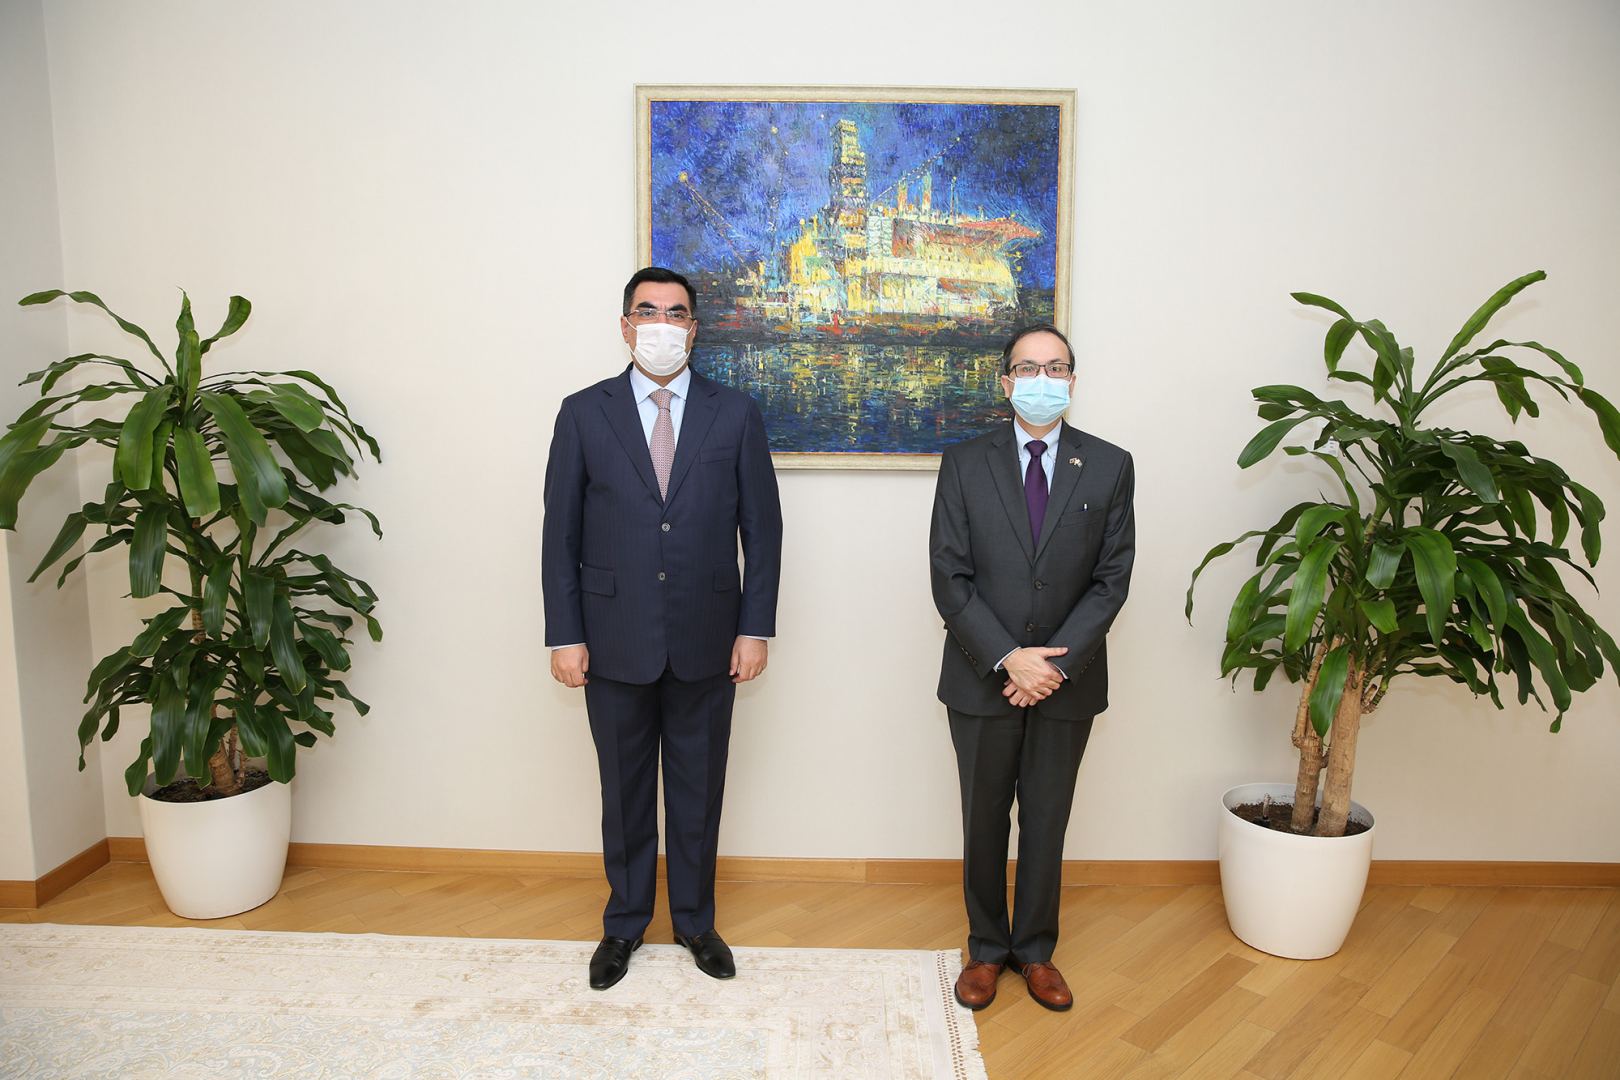 Ambassador of Pakistan paid a visit to Baku Higher Oil School